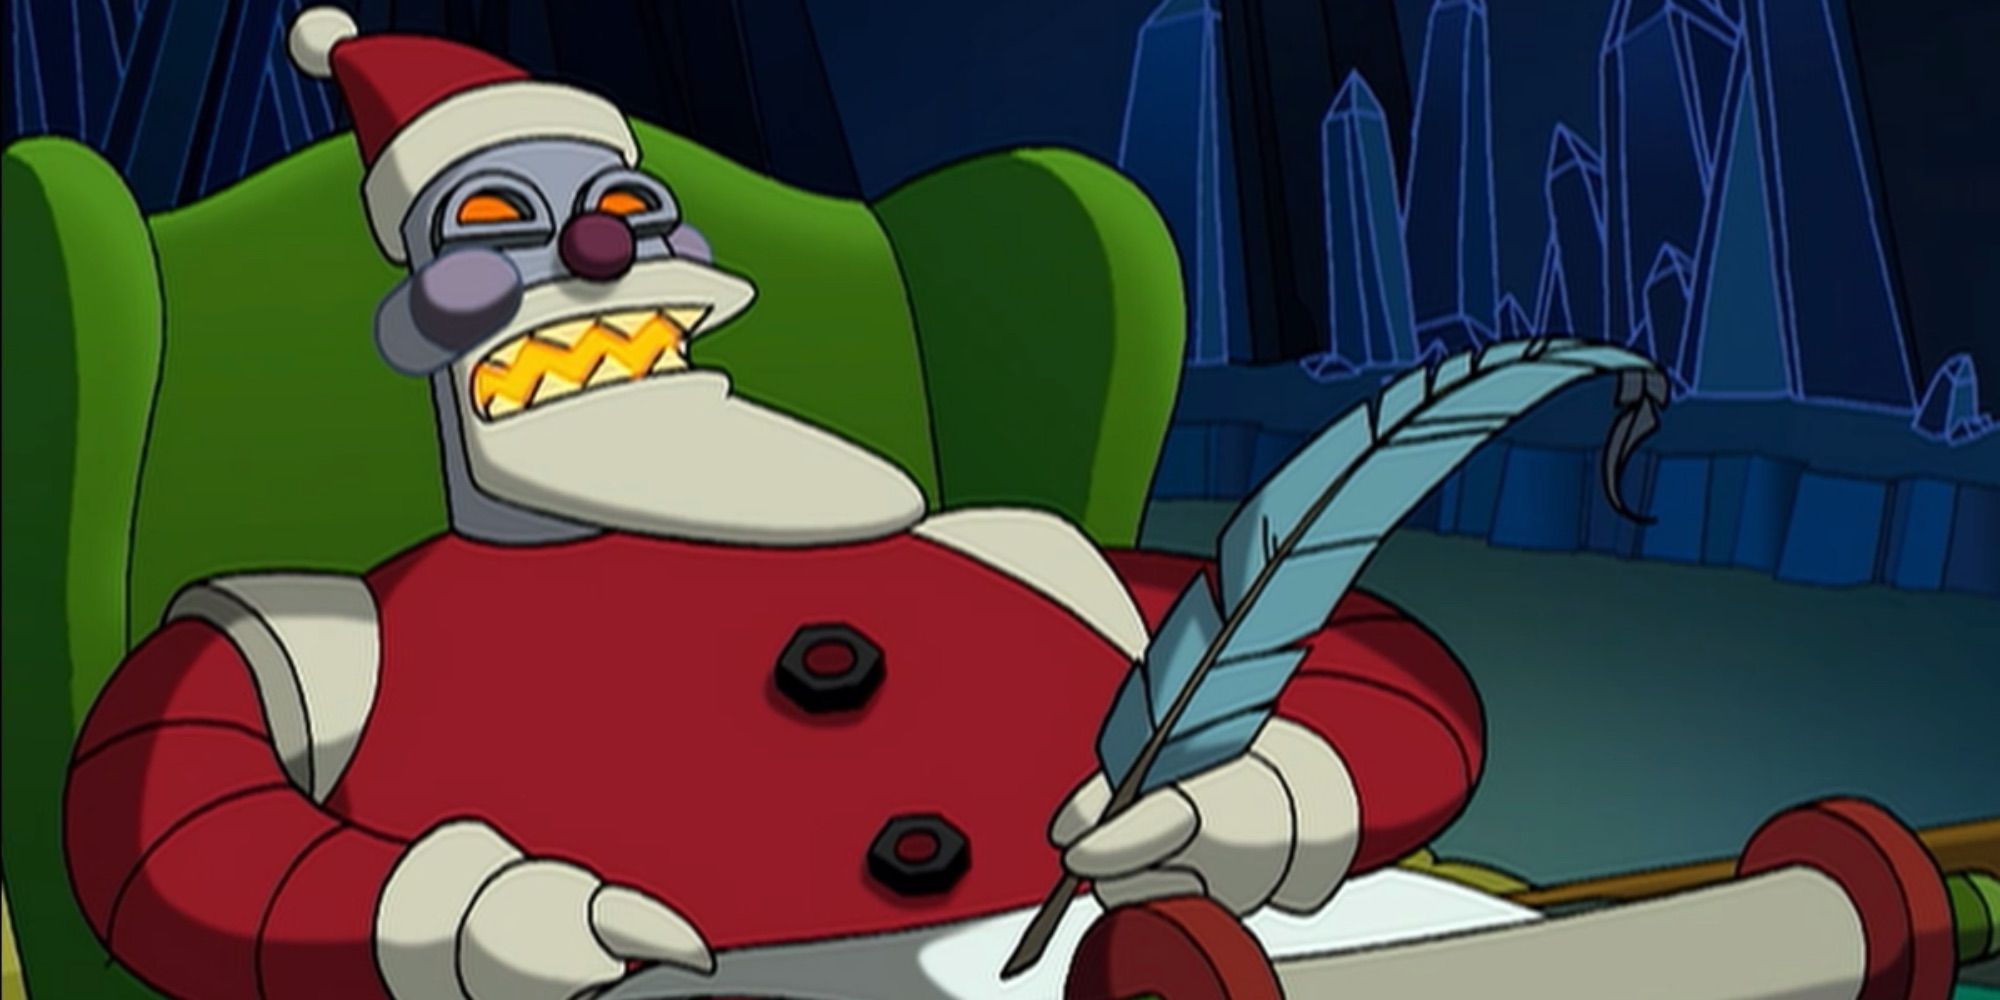 Robot Santa